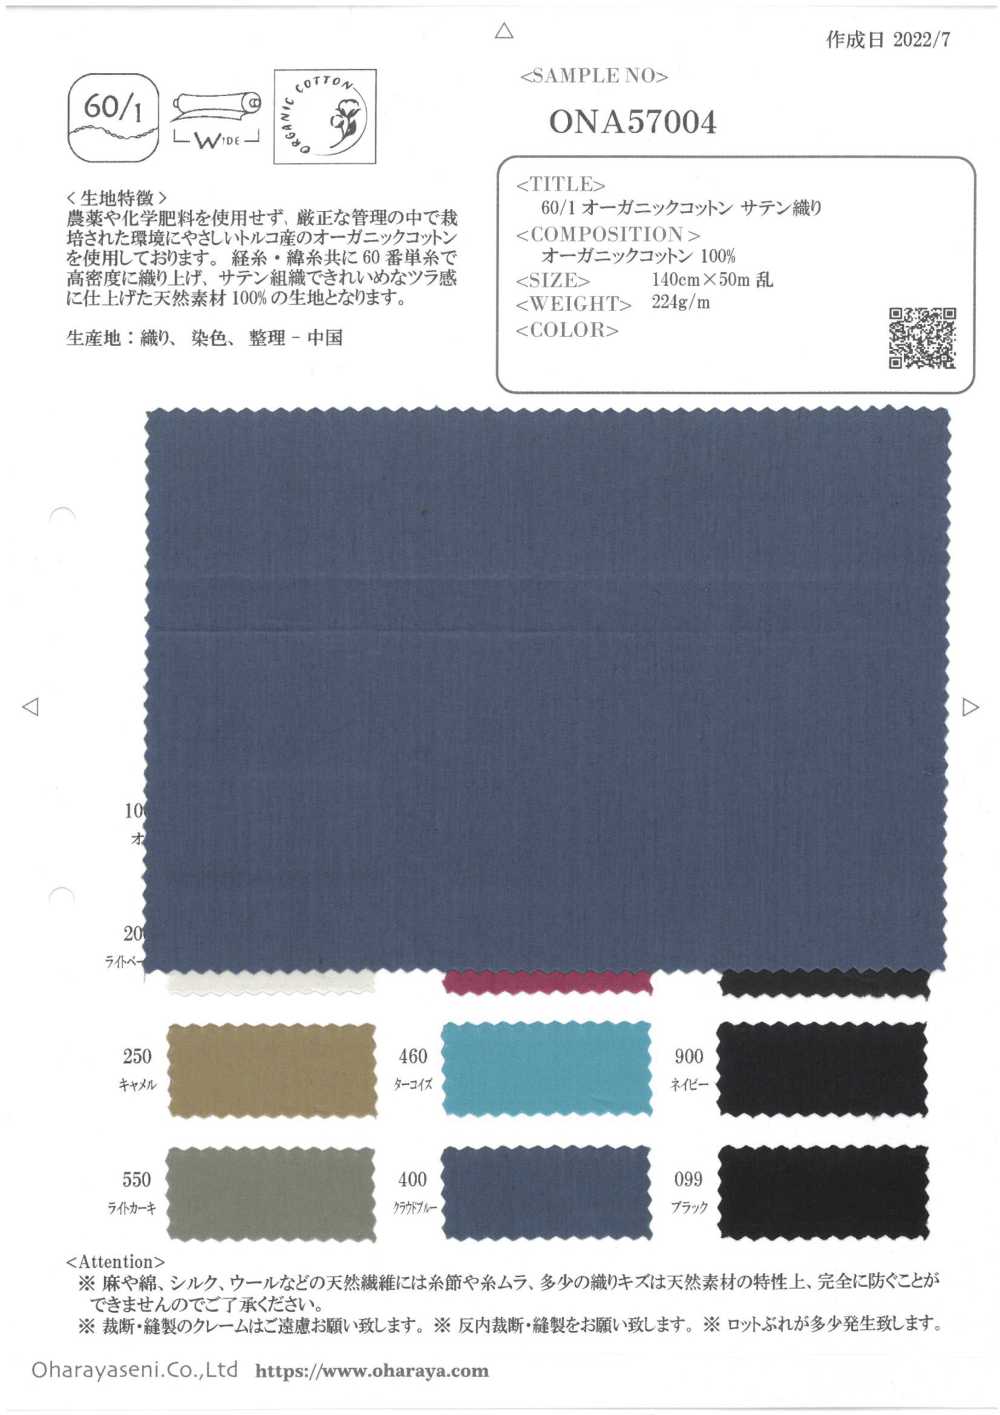 ONA57004 Satin De Coton Biologique 60/1[Fabrication De Textile] Oharayaseni